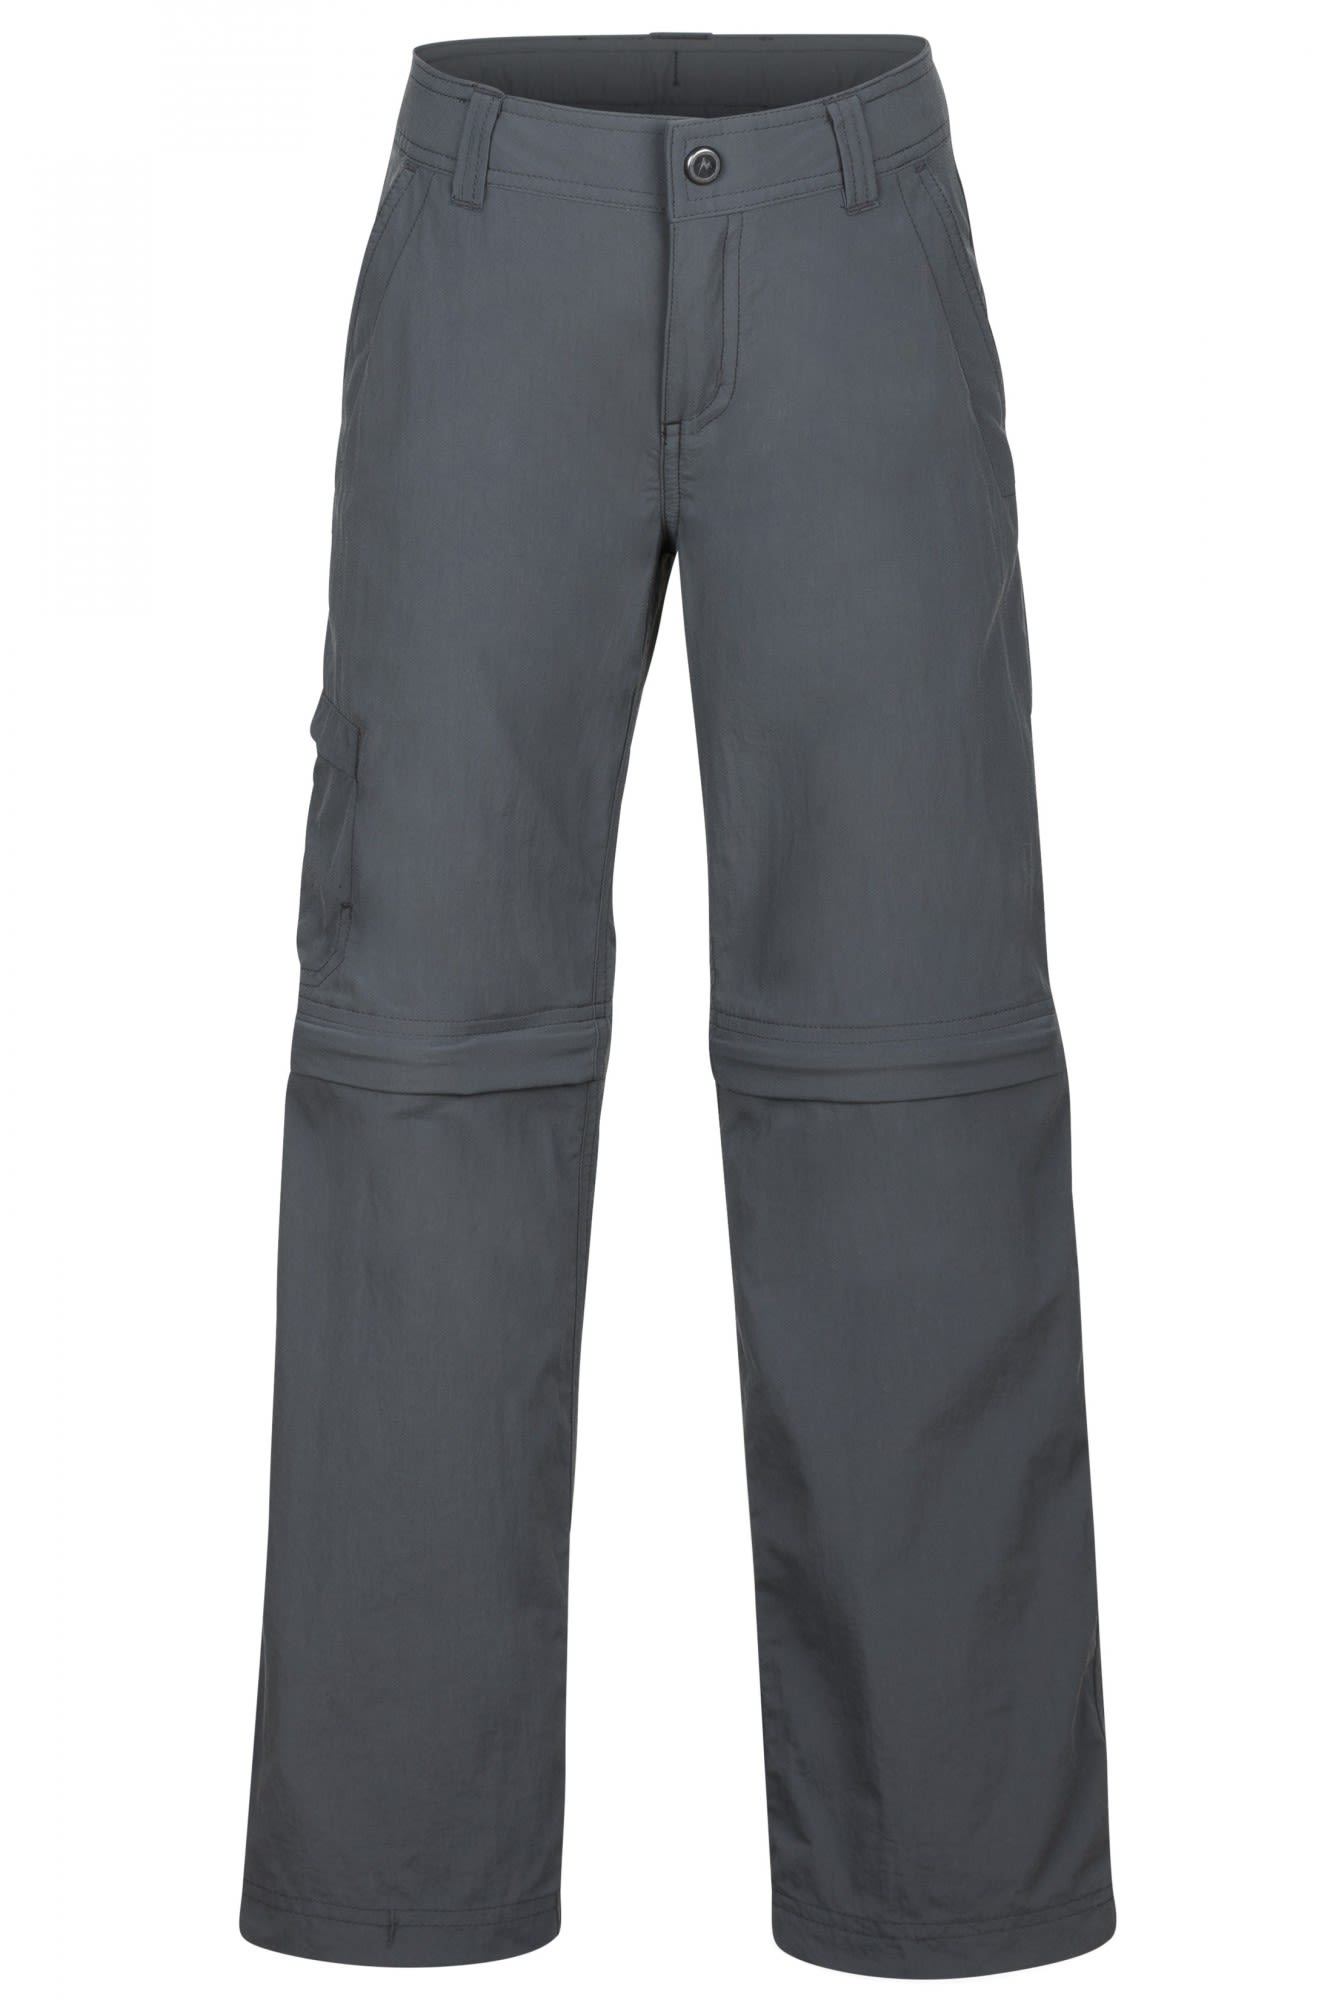 Marmot Boys Cruz Convertible Pant Grau- Male Shorts- Grsse S - Farbe Slate Grey